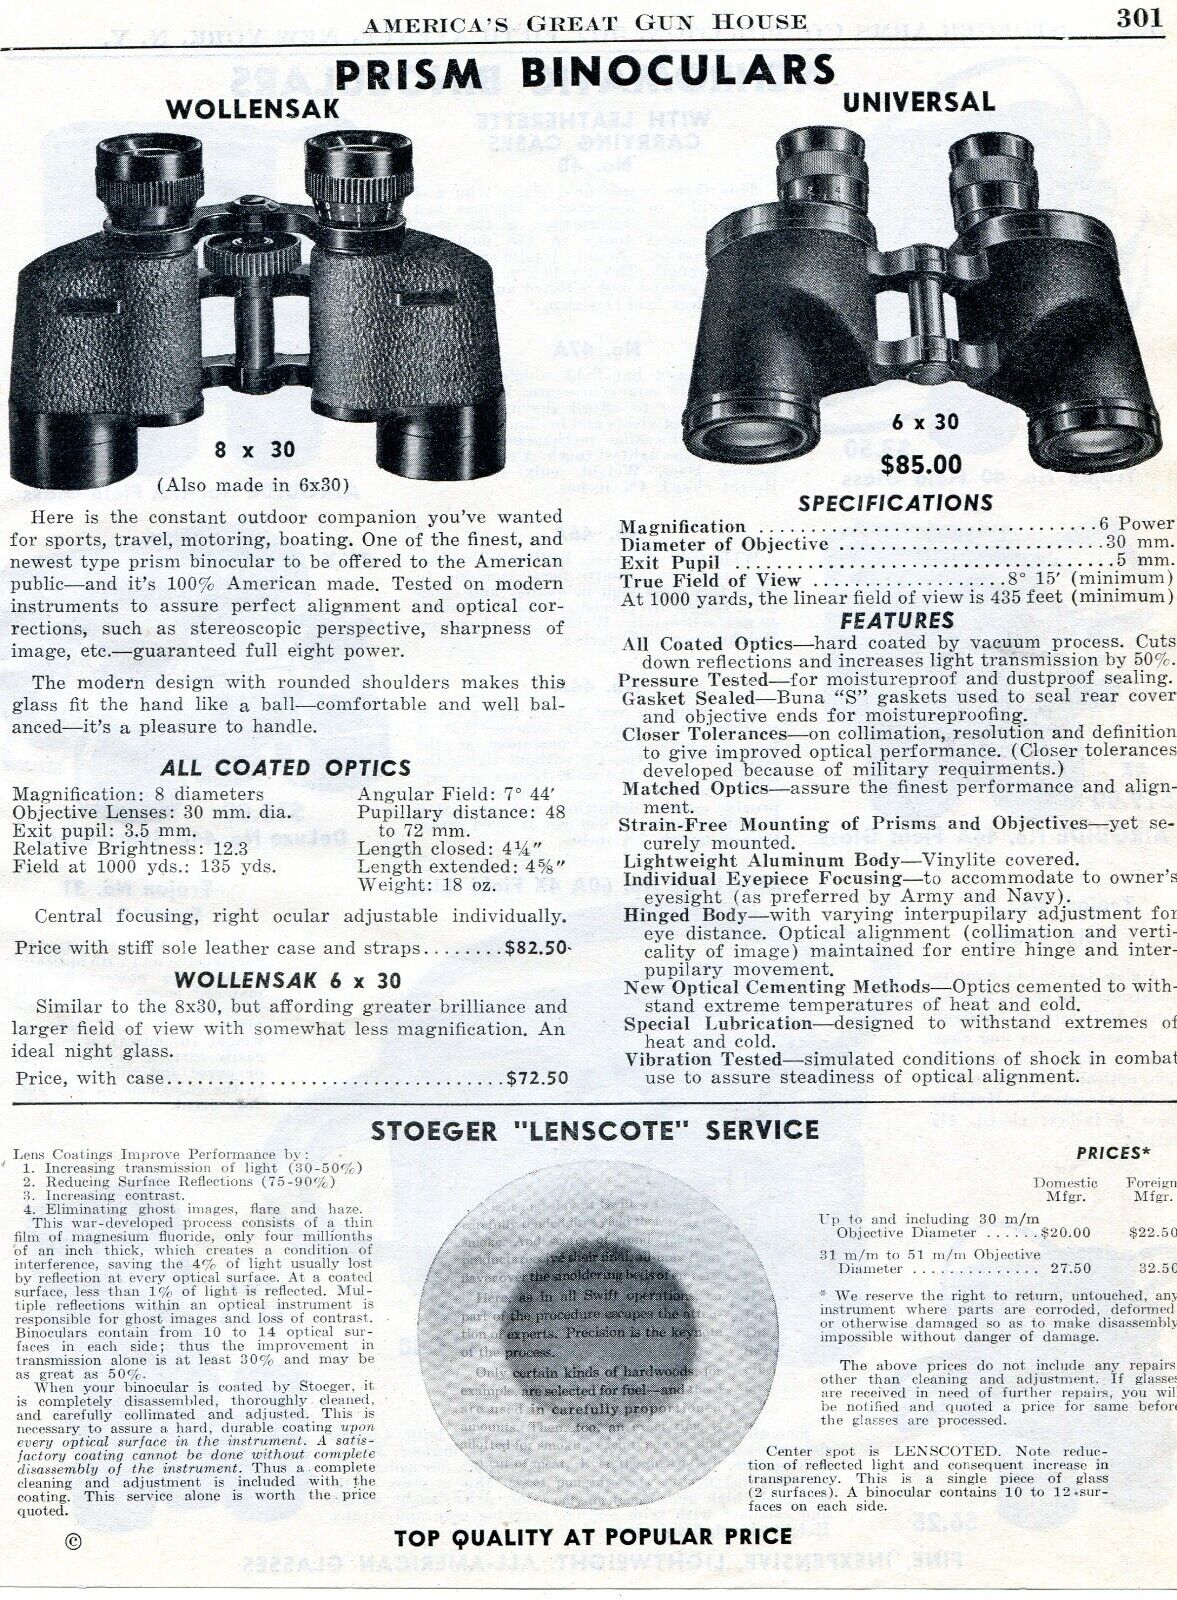 1947 Print Ad of Wollensak & Universal Prism Binocular